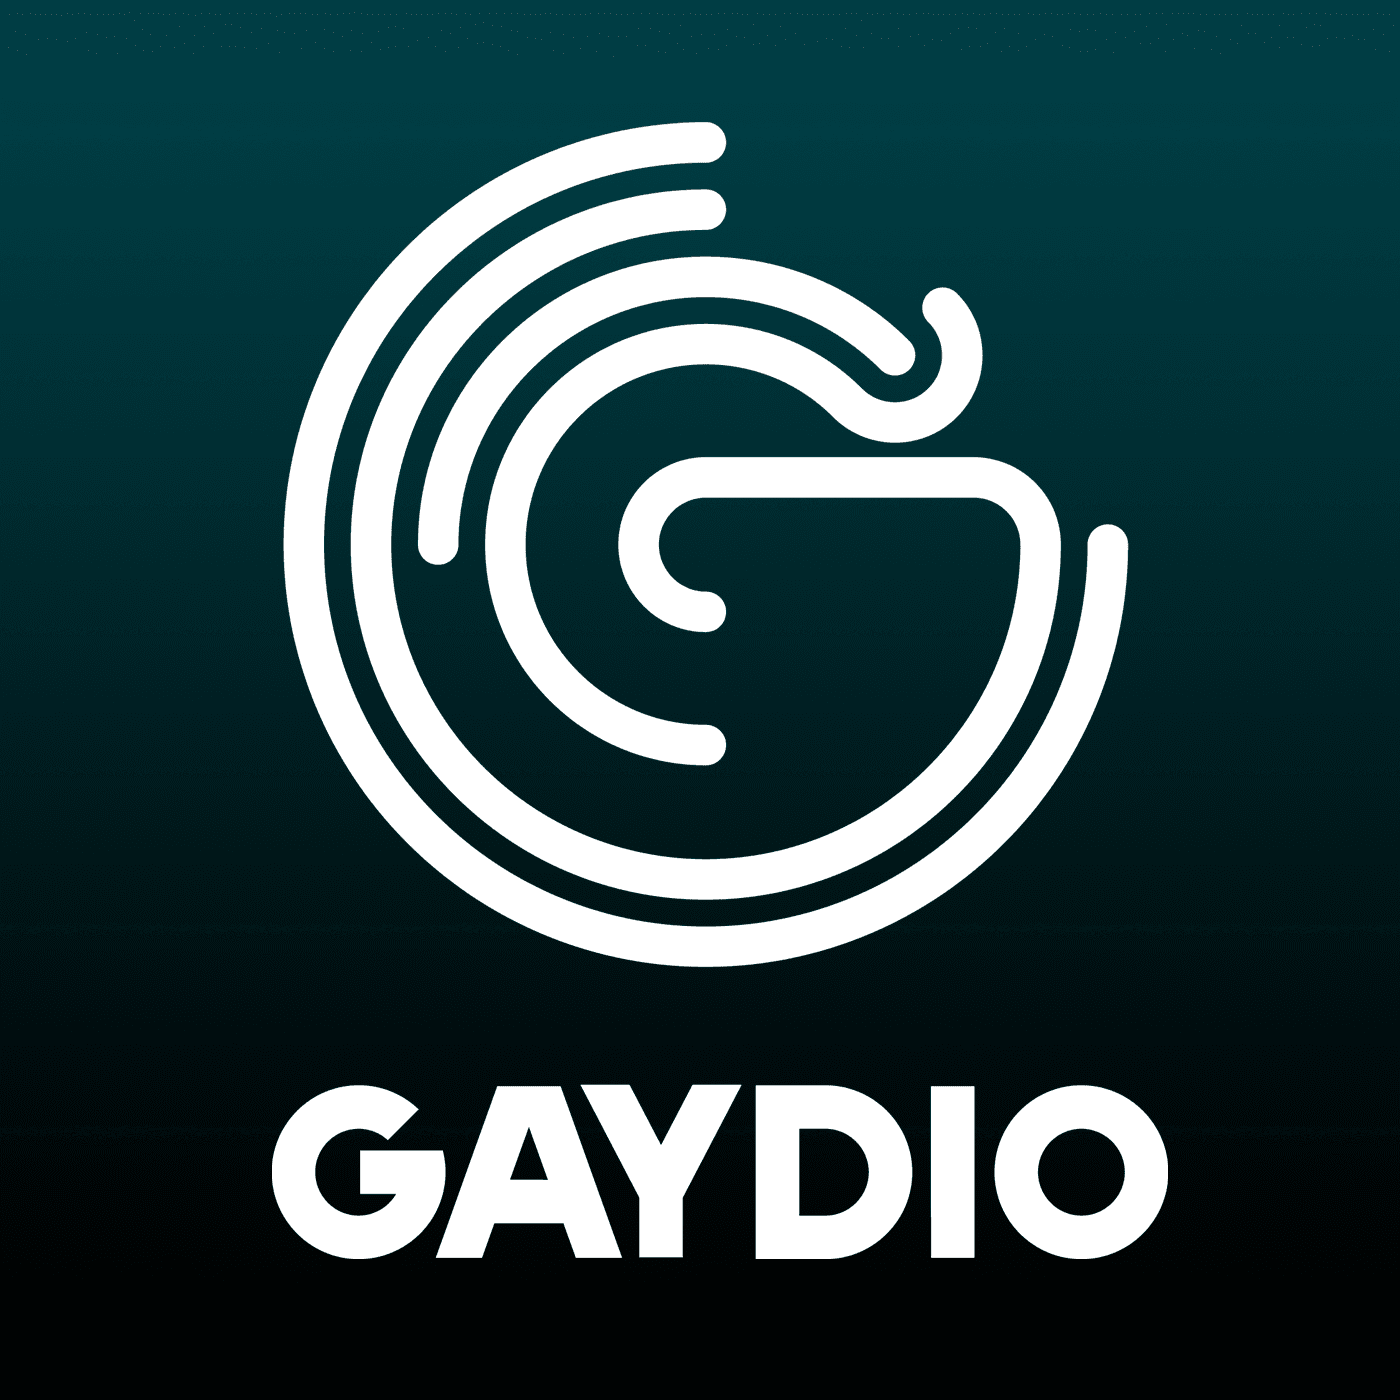 Radijas internetu Gaydio